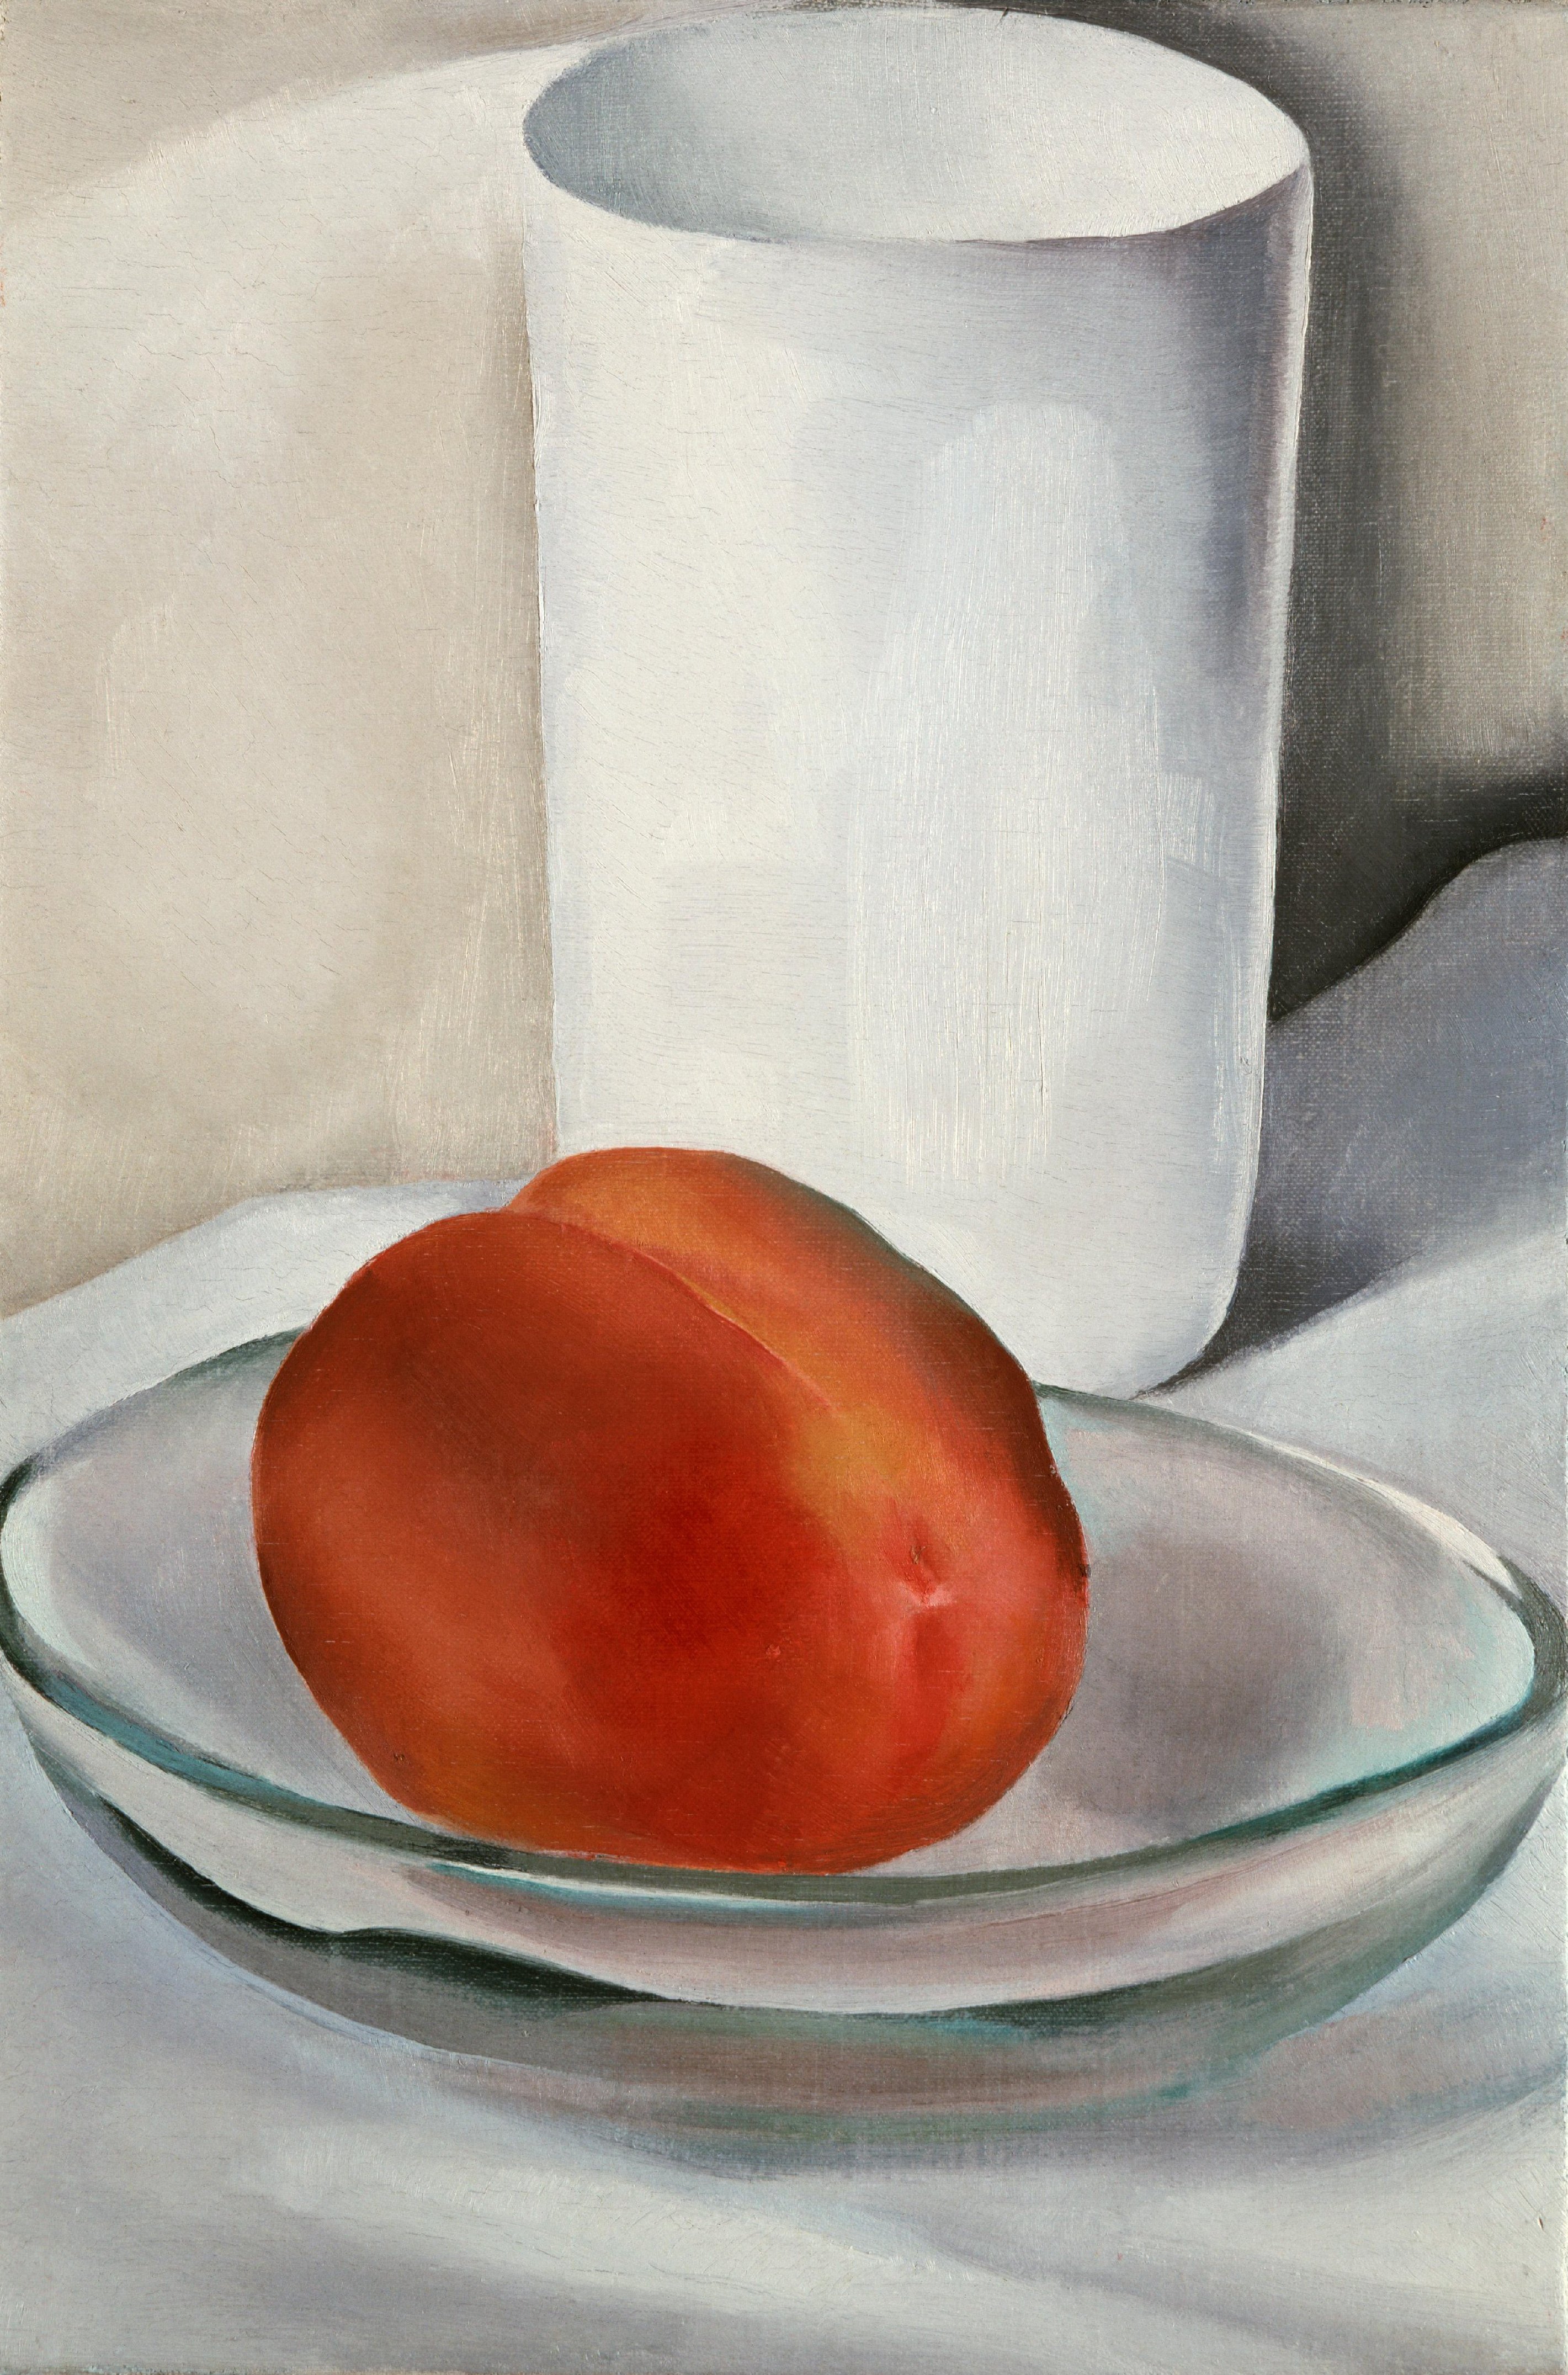 Georgia O'Keeffe. Peach and Glass. 1927. Source: Philadelphia Museum of Art